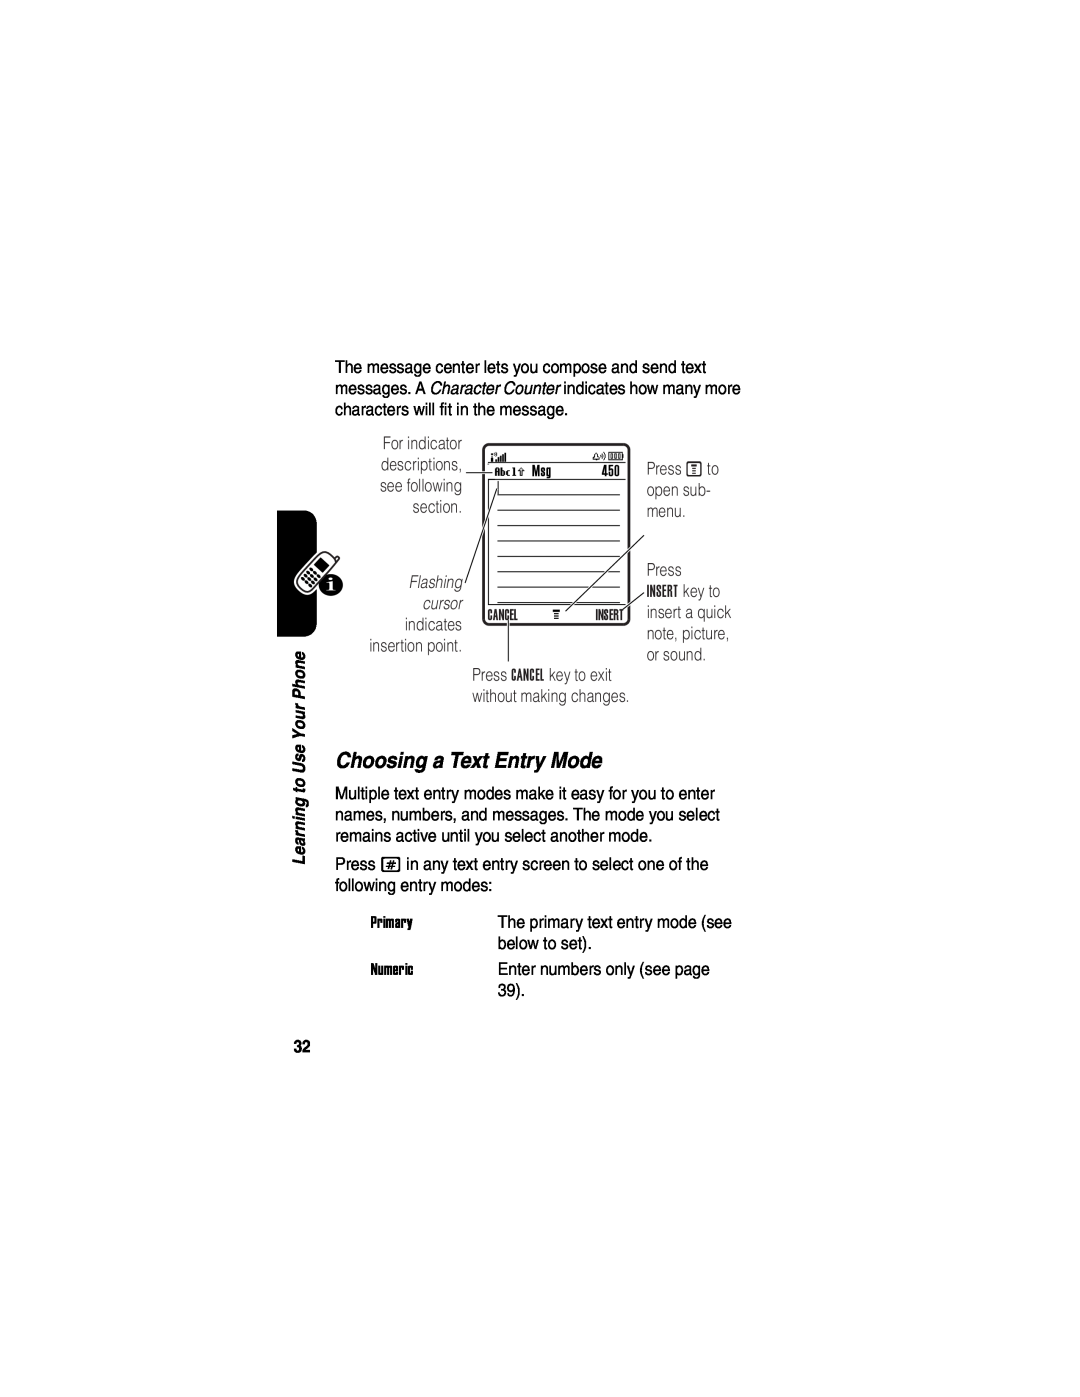 Motorola V551SLVATT manual Choosing a Text Entry Mode, Press Mto, open sub, menu, or sound 